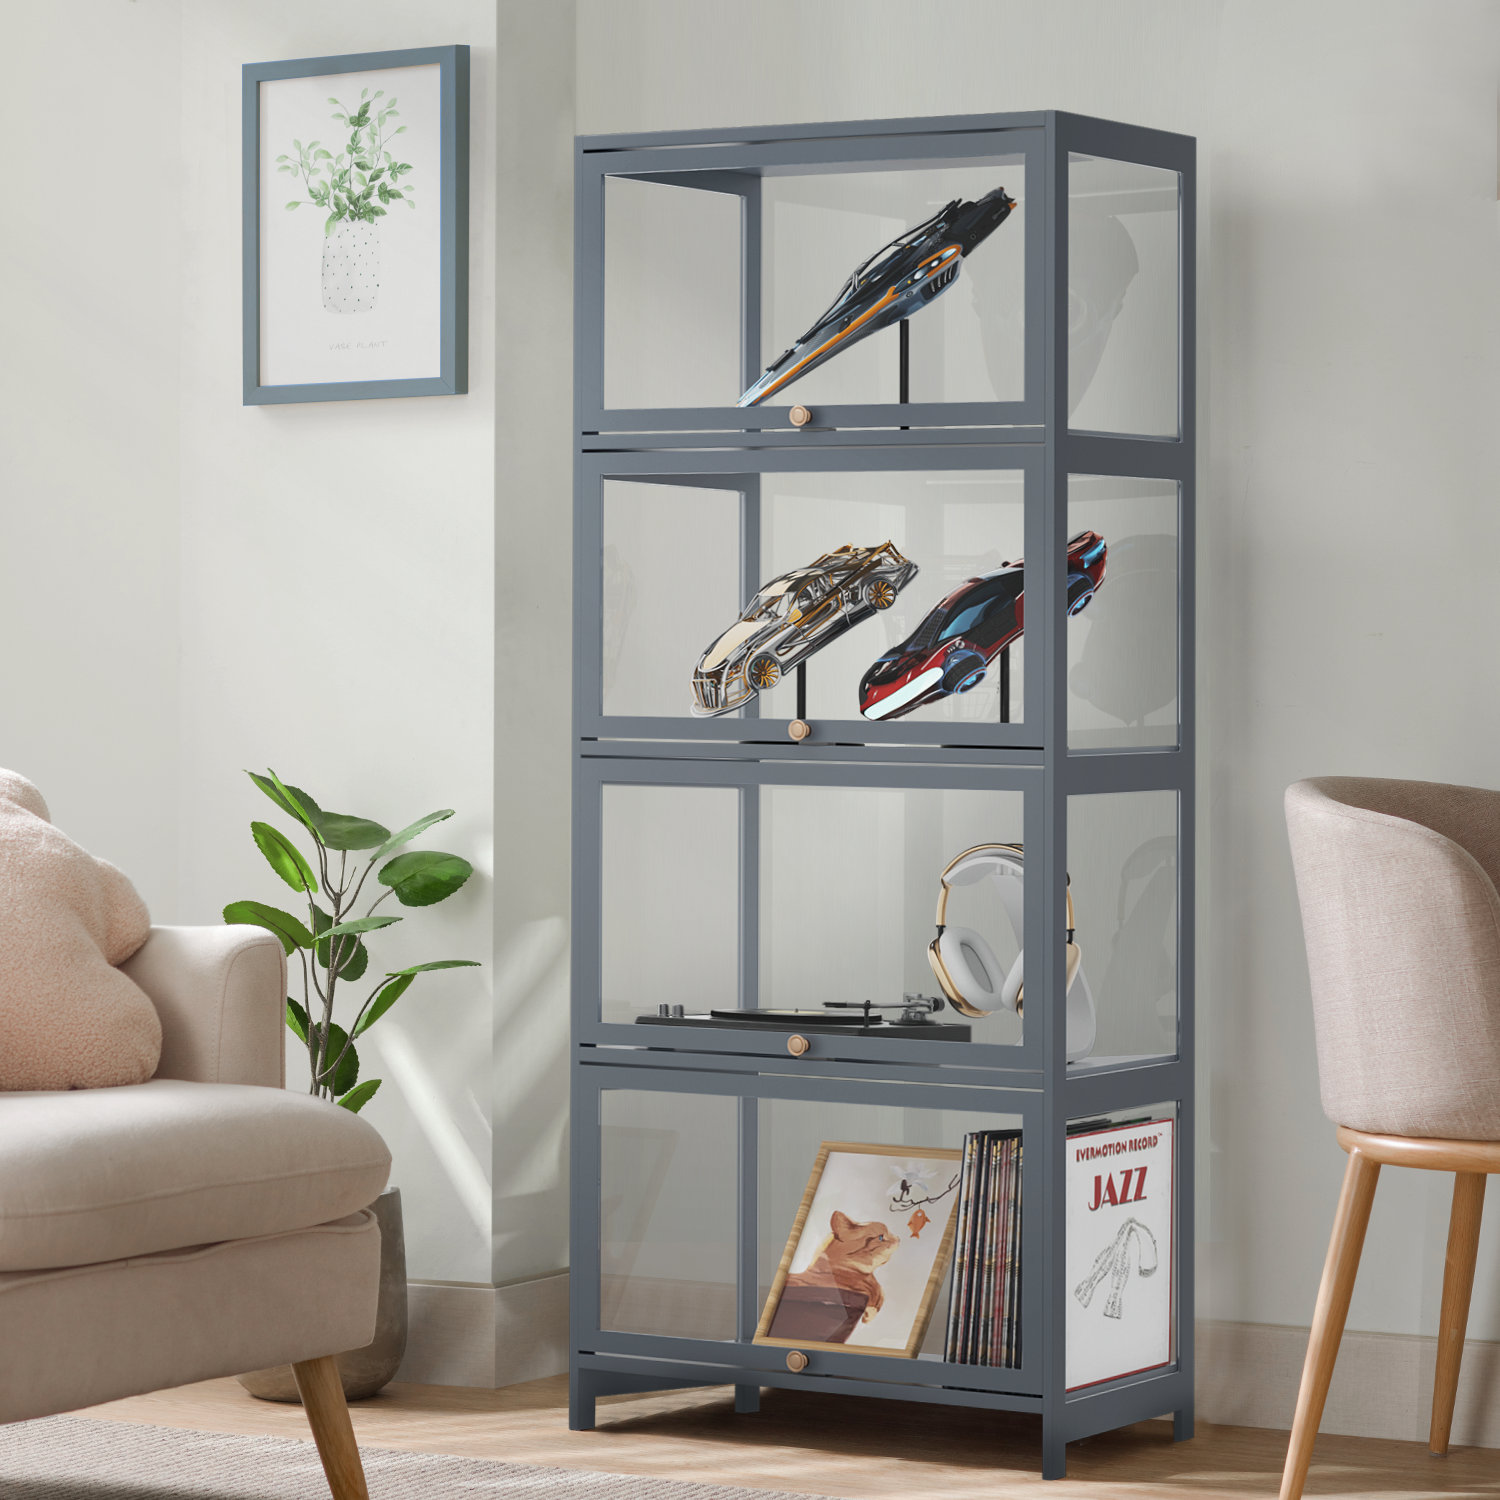 Acrylic Bookcase Desktop Book Organizer Transparent Dustproof